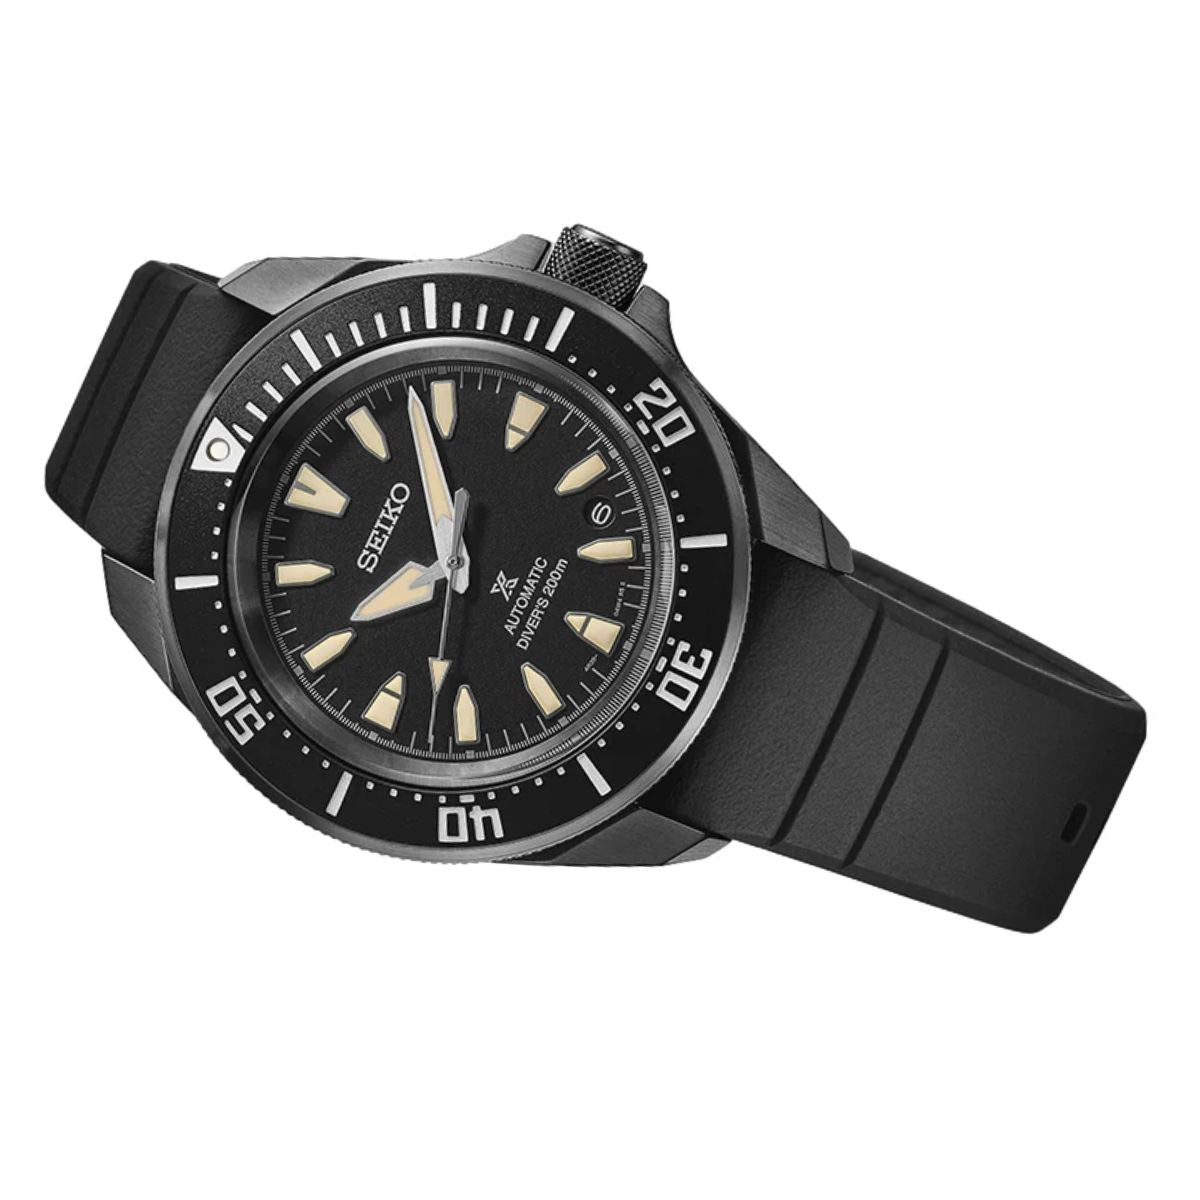 Seiko Prospex Samurai SRPL15K1 SRPL15 SRPL15 Black Dial Automatic Diver Watch